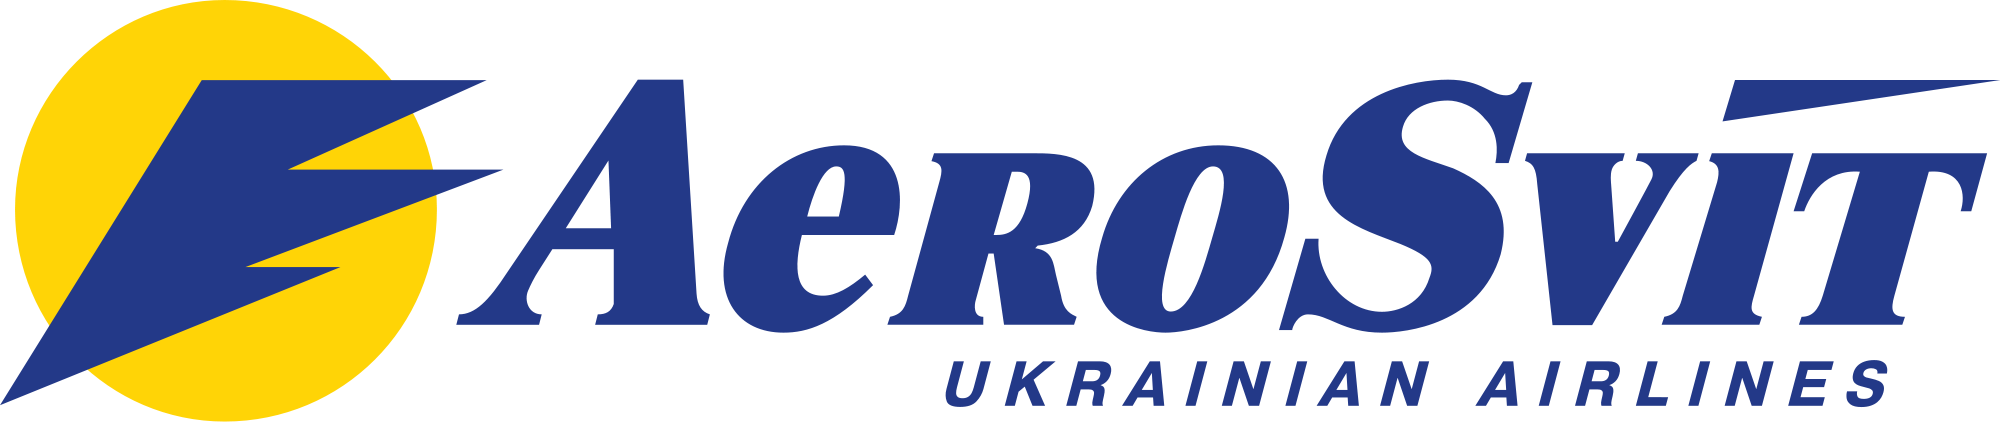 AeroSvit Ukrainian Airlines modern logo.png